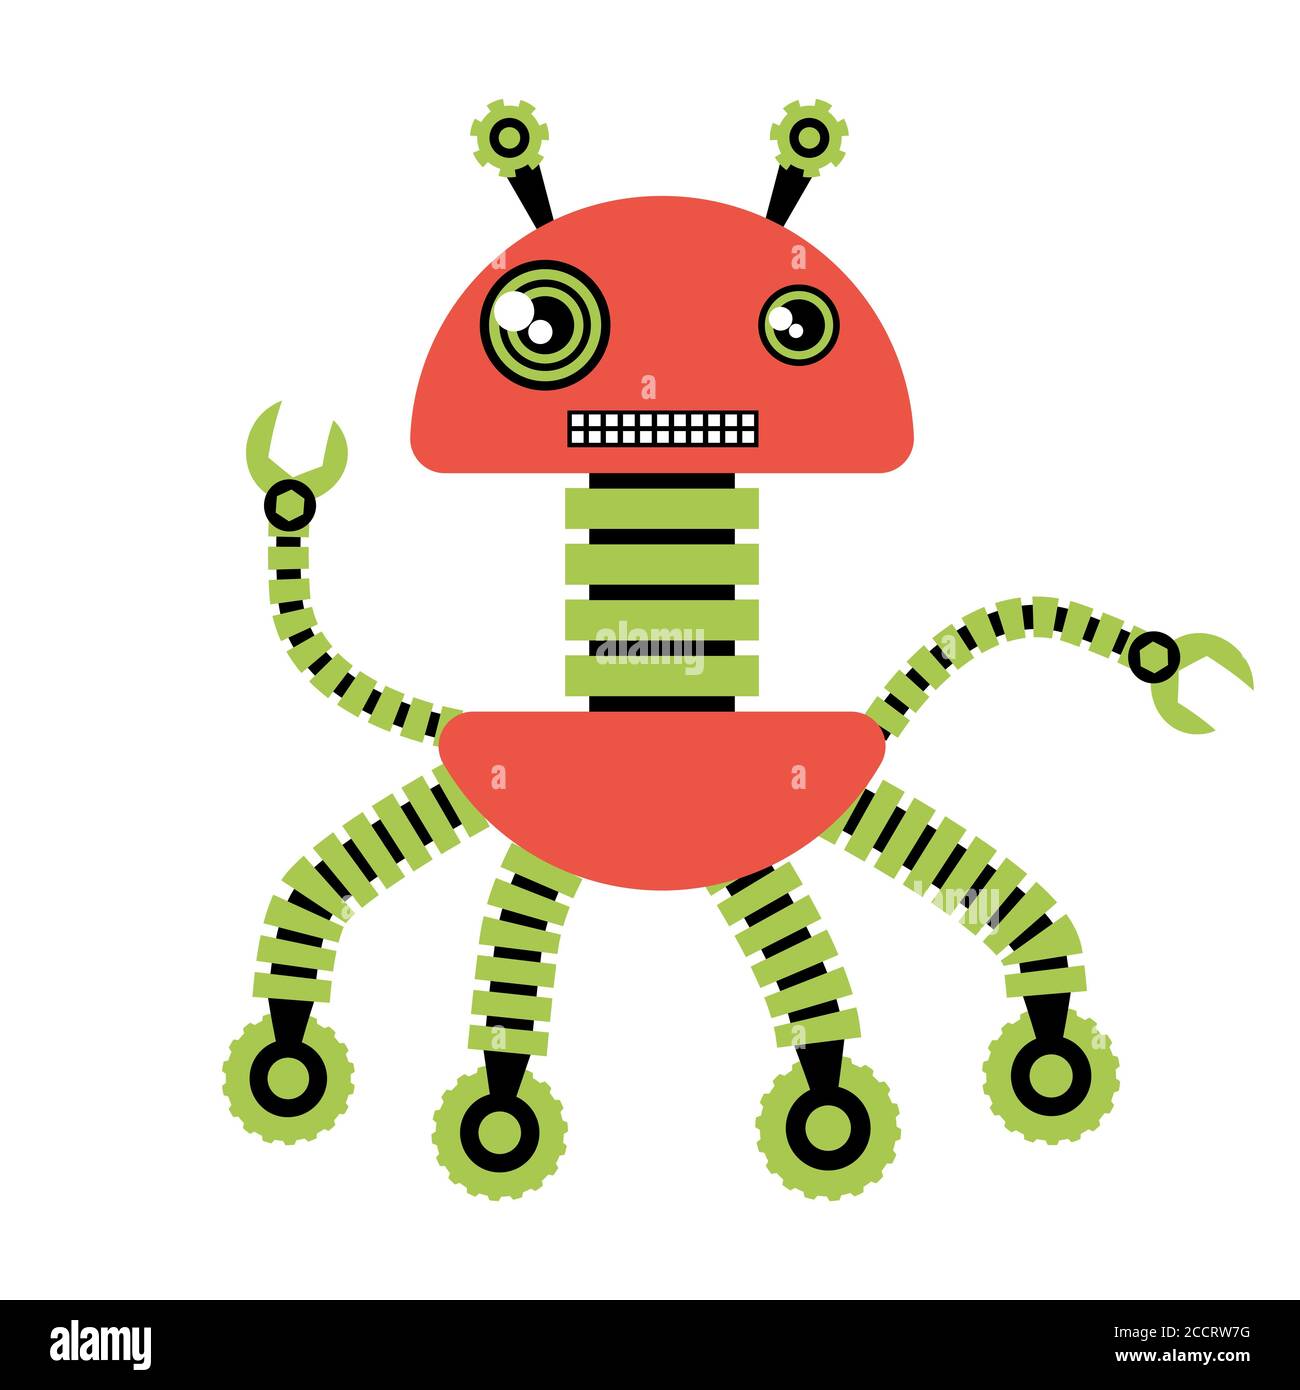 https://c8.alamy.com/comp/2CCRW7G/illustration-of-funny-robot-2CCRW7G.jpg